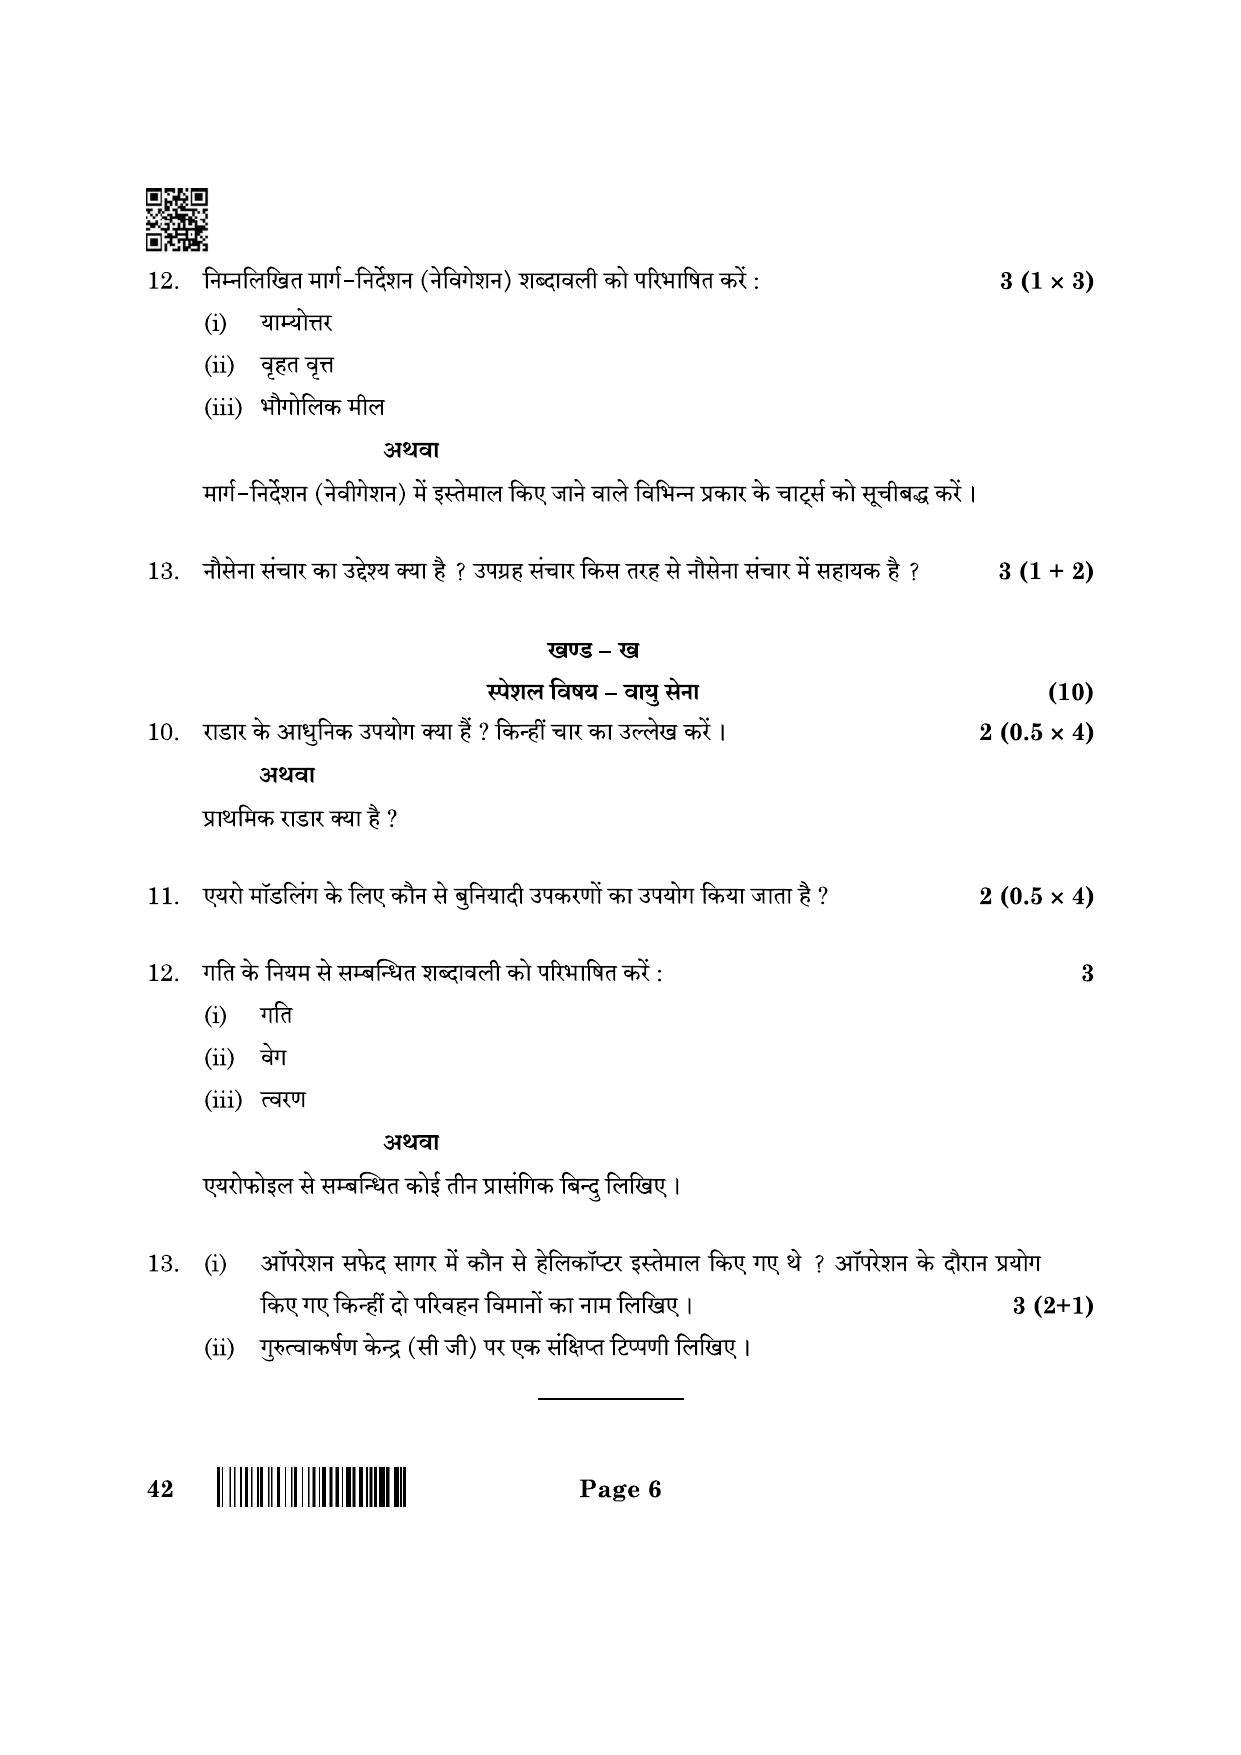 CBSE Class 12 42_NCC 2022 Question Paper - Page 6